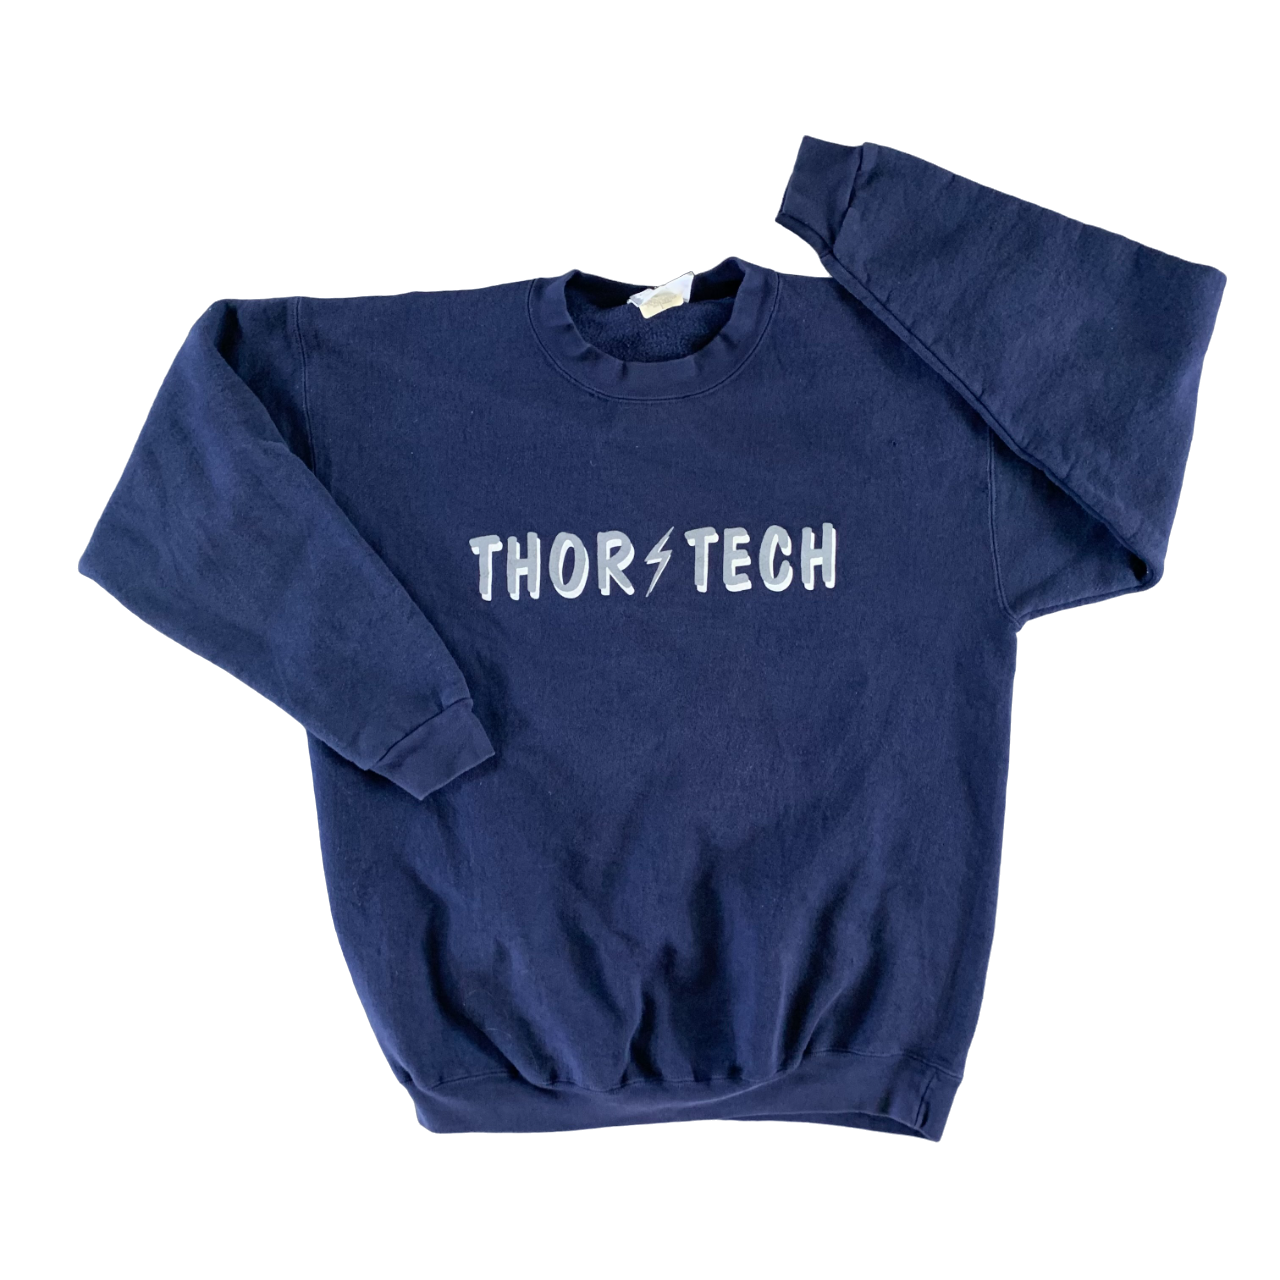 Vintage 1990s Thor Tech Sweatshirt size Large